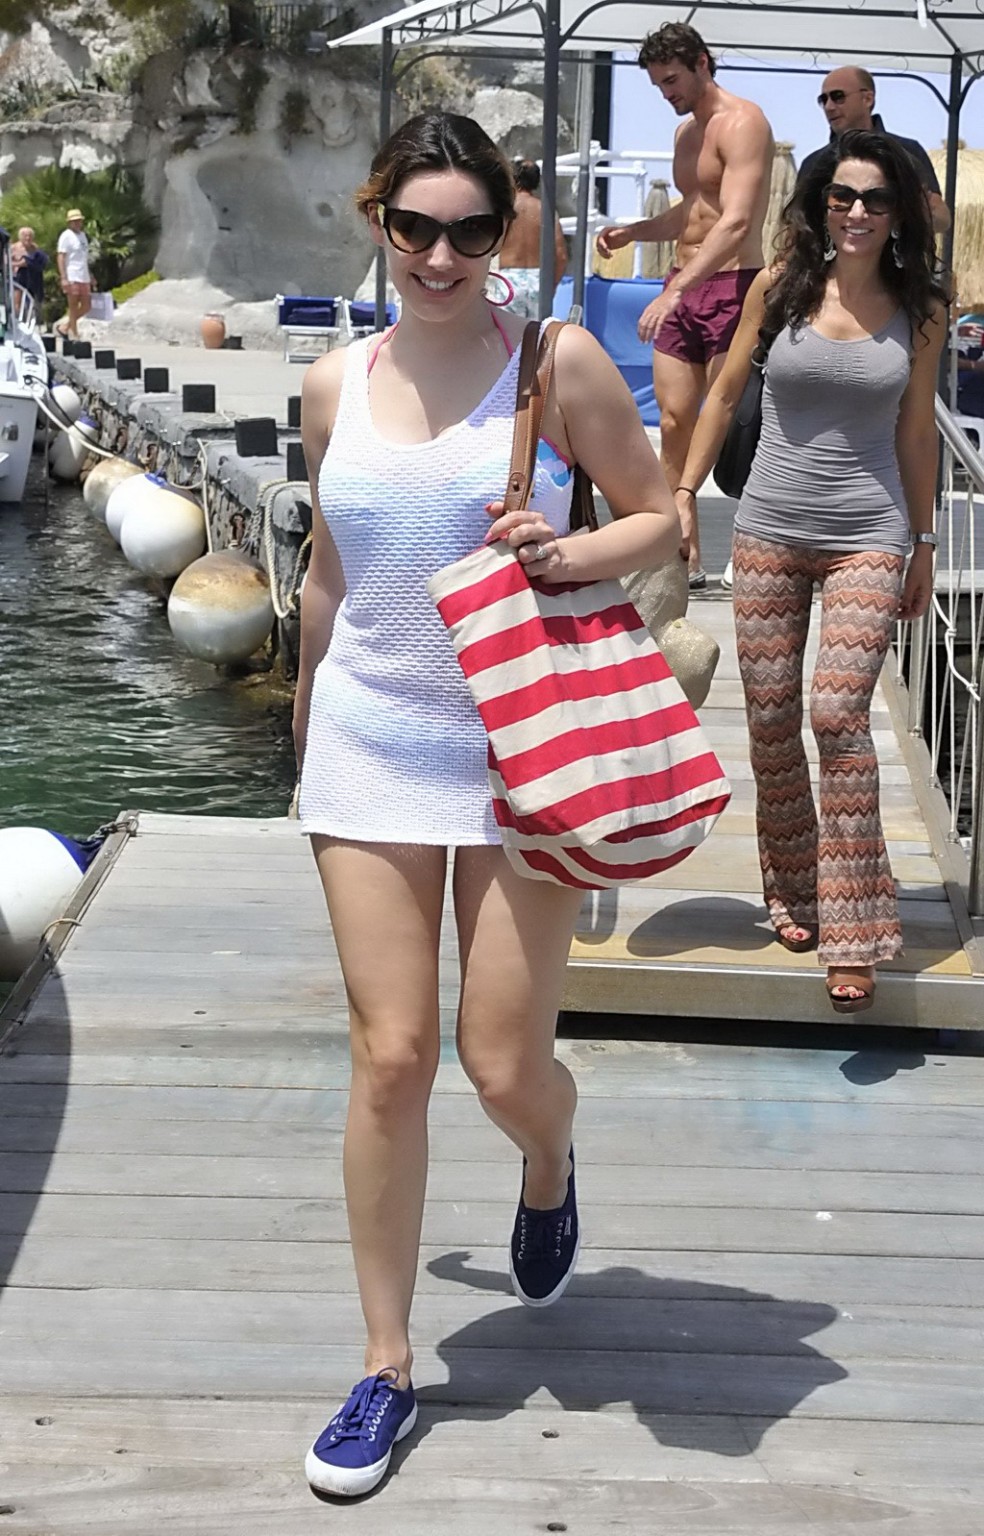 Kelly brook en bikini transparent lors d'une promenade en bateau en italie
 #75257519